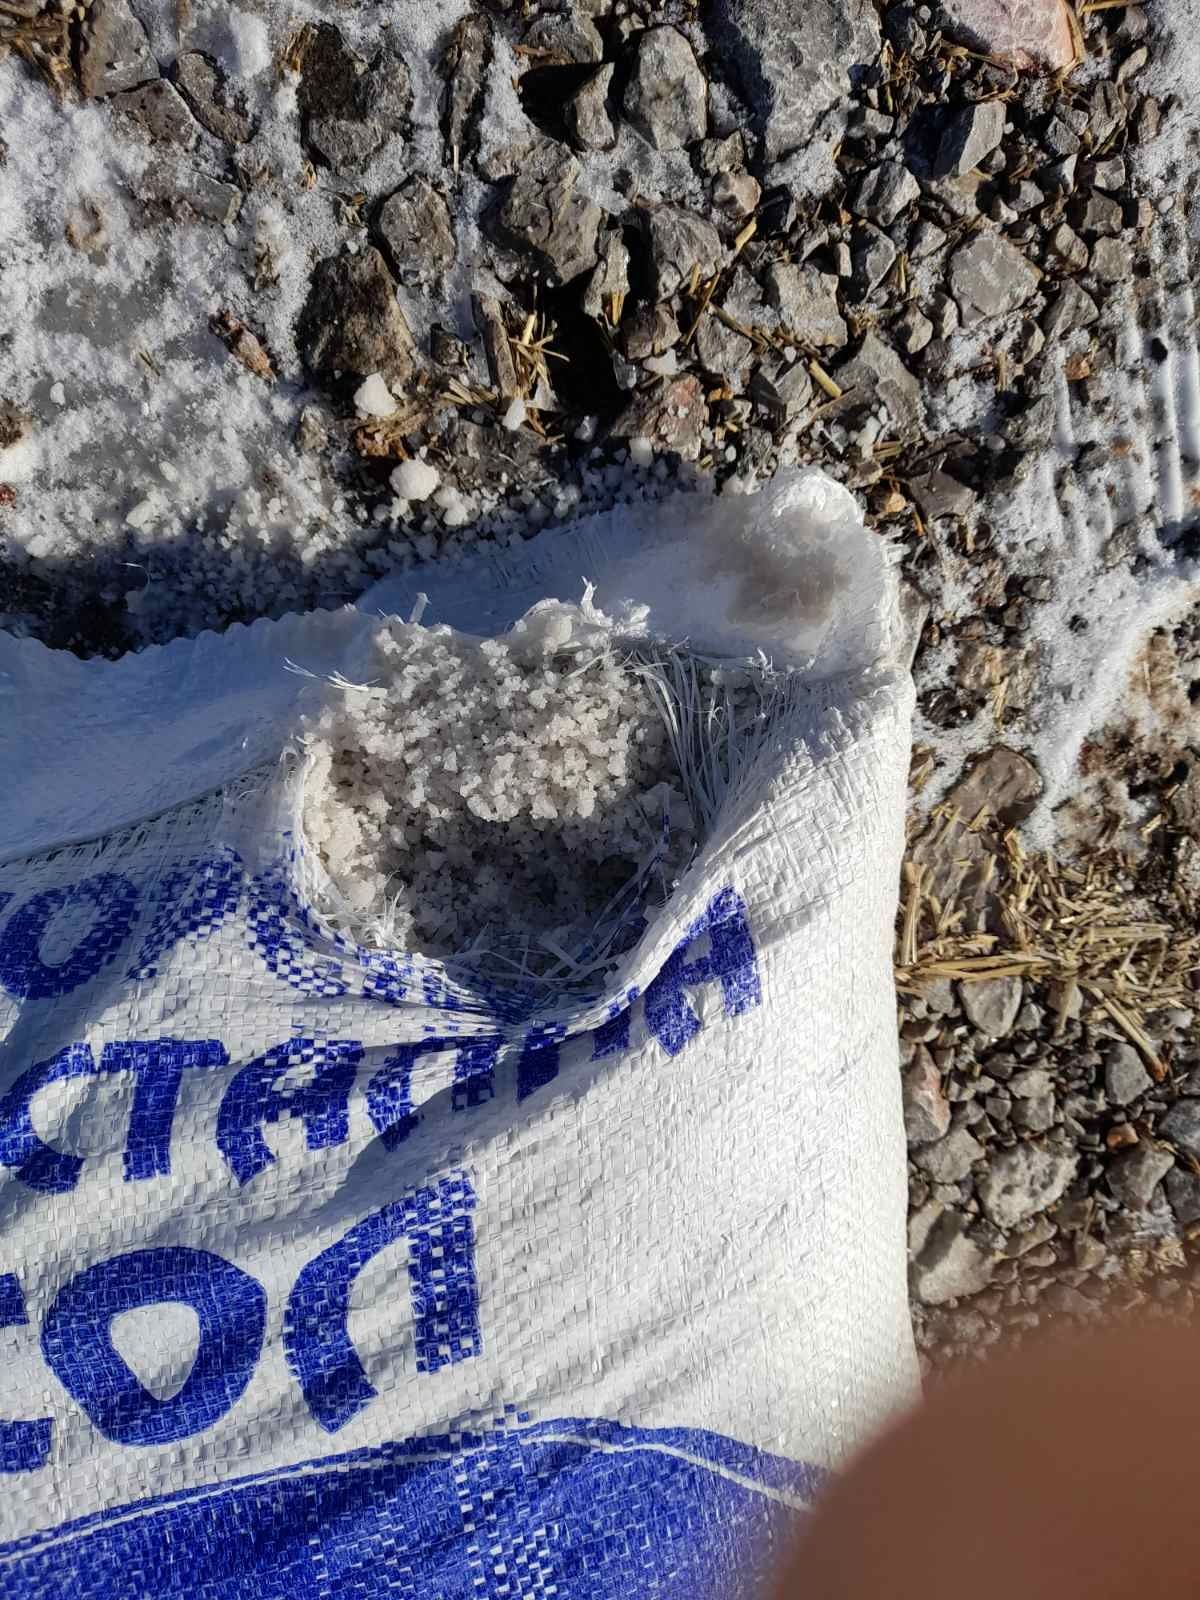 Морска сол за снегопочистване торба 25 кг